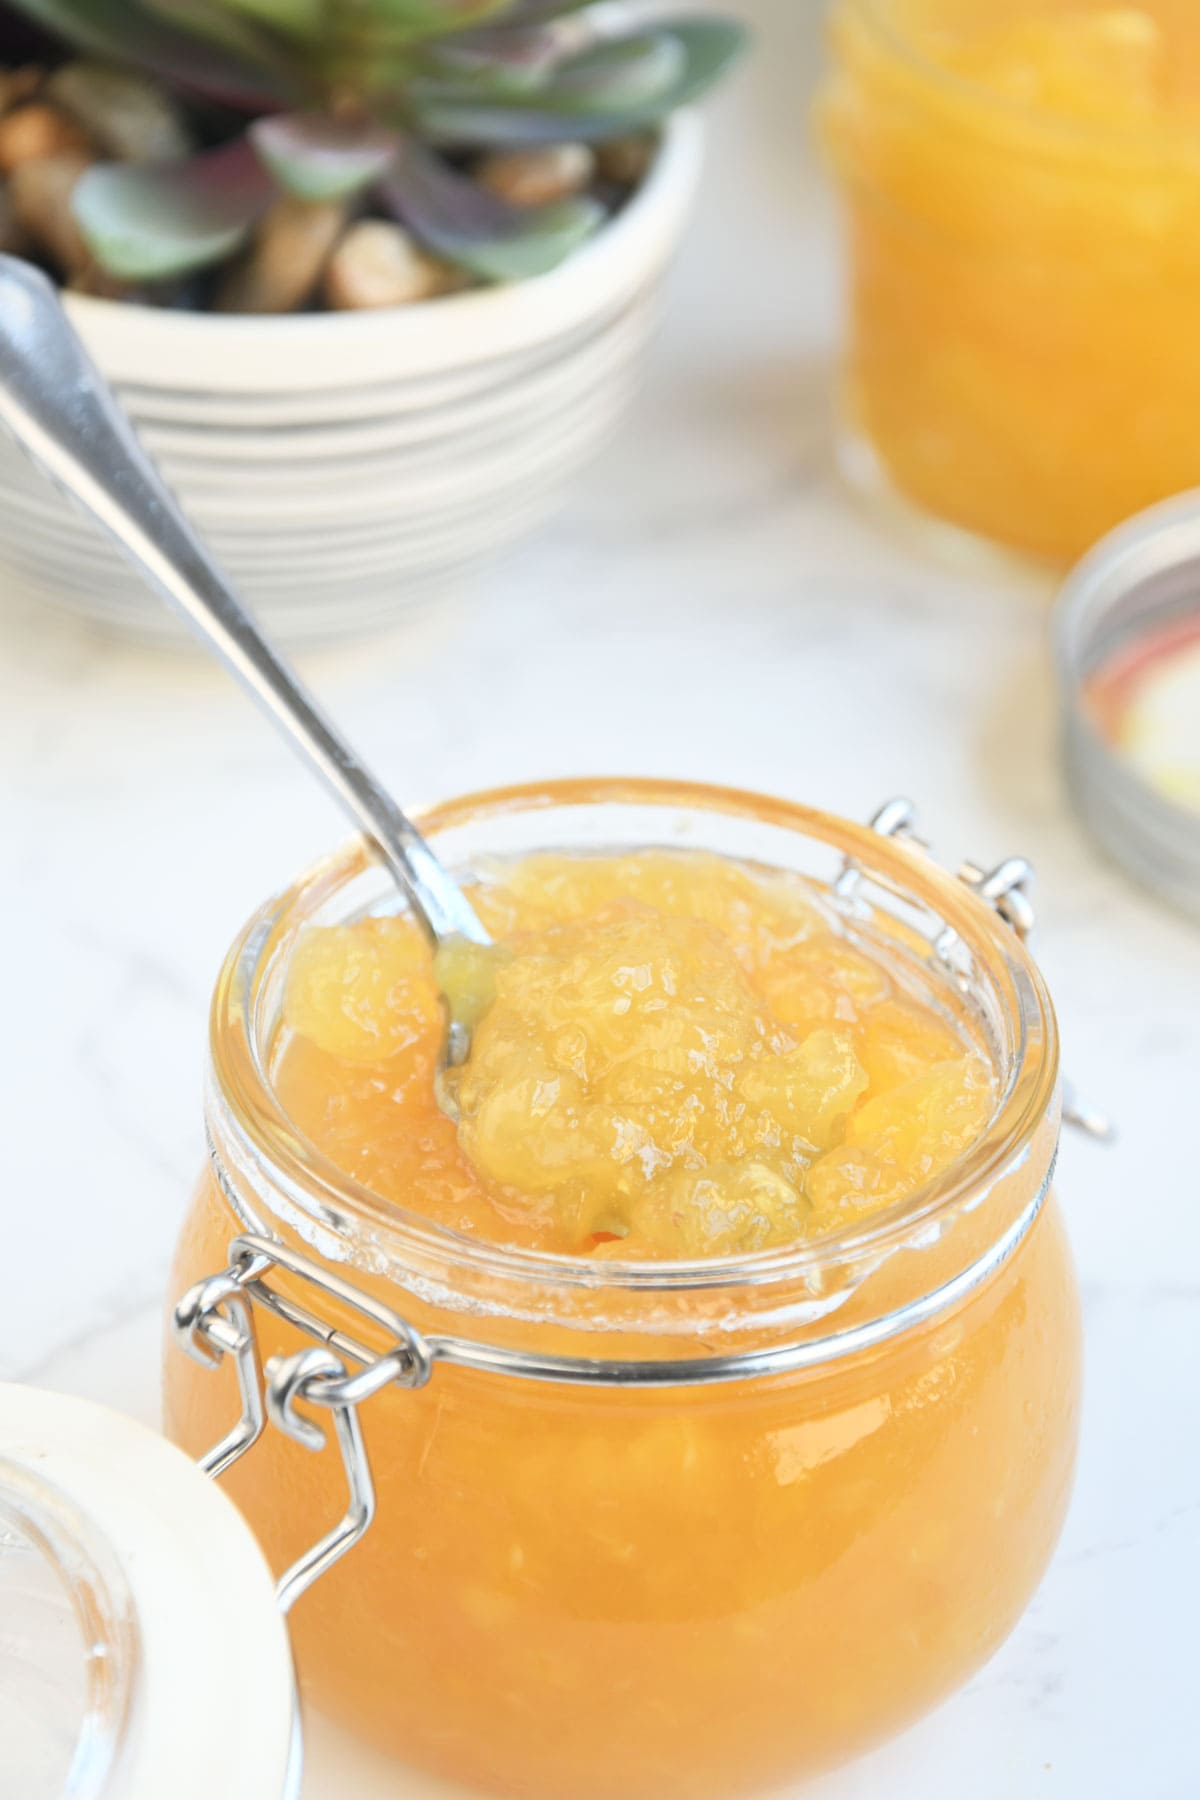 Pineapple jam in a jar.